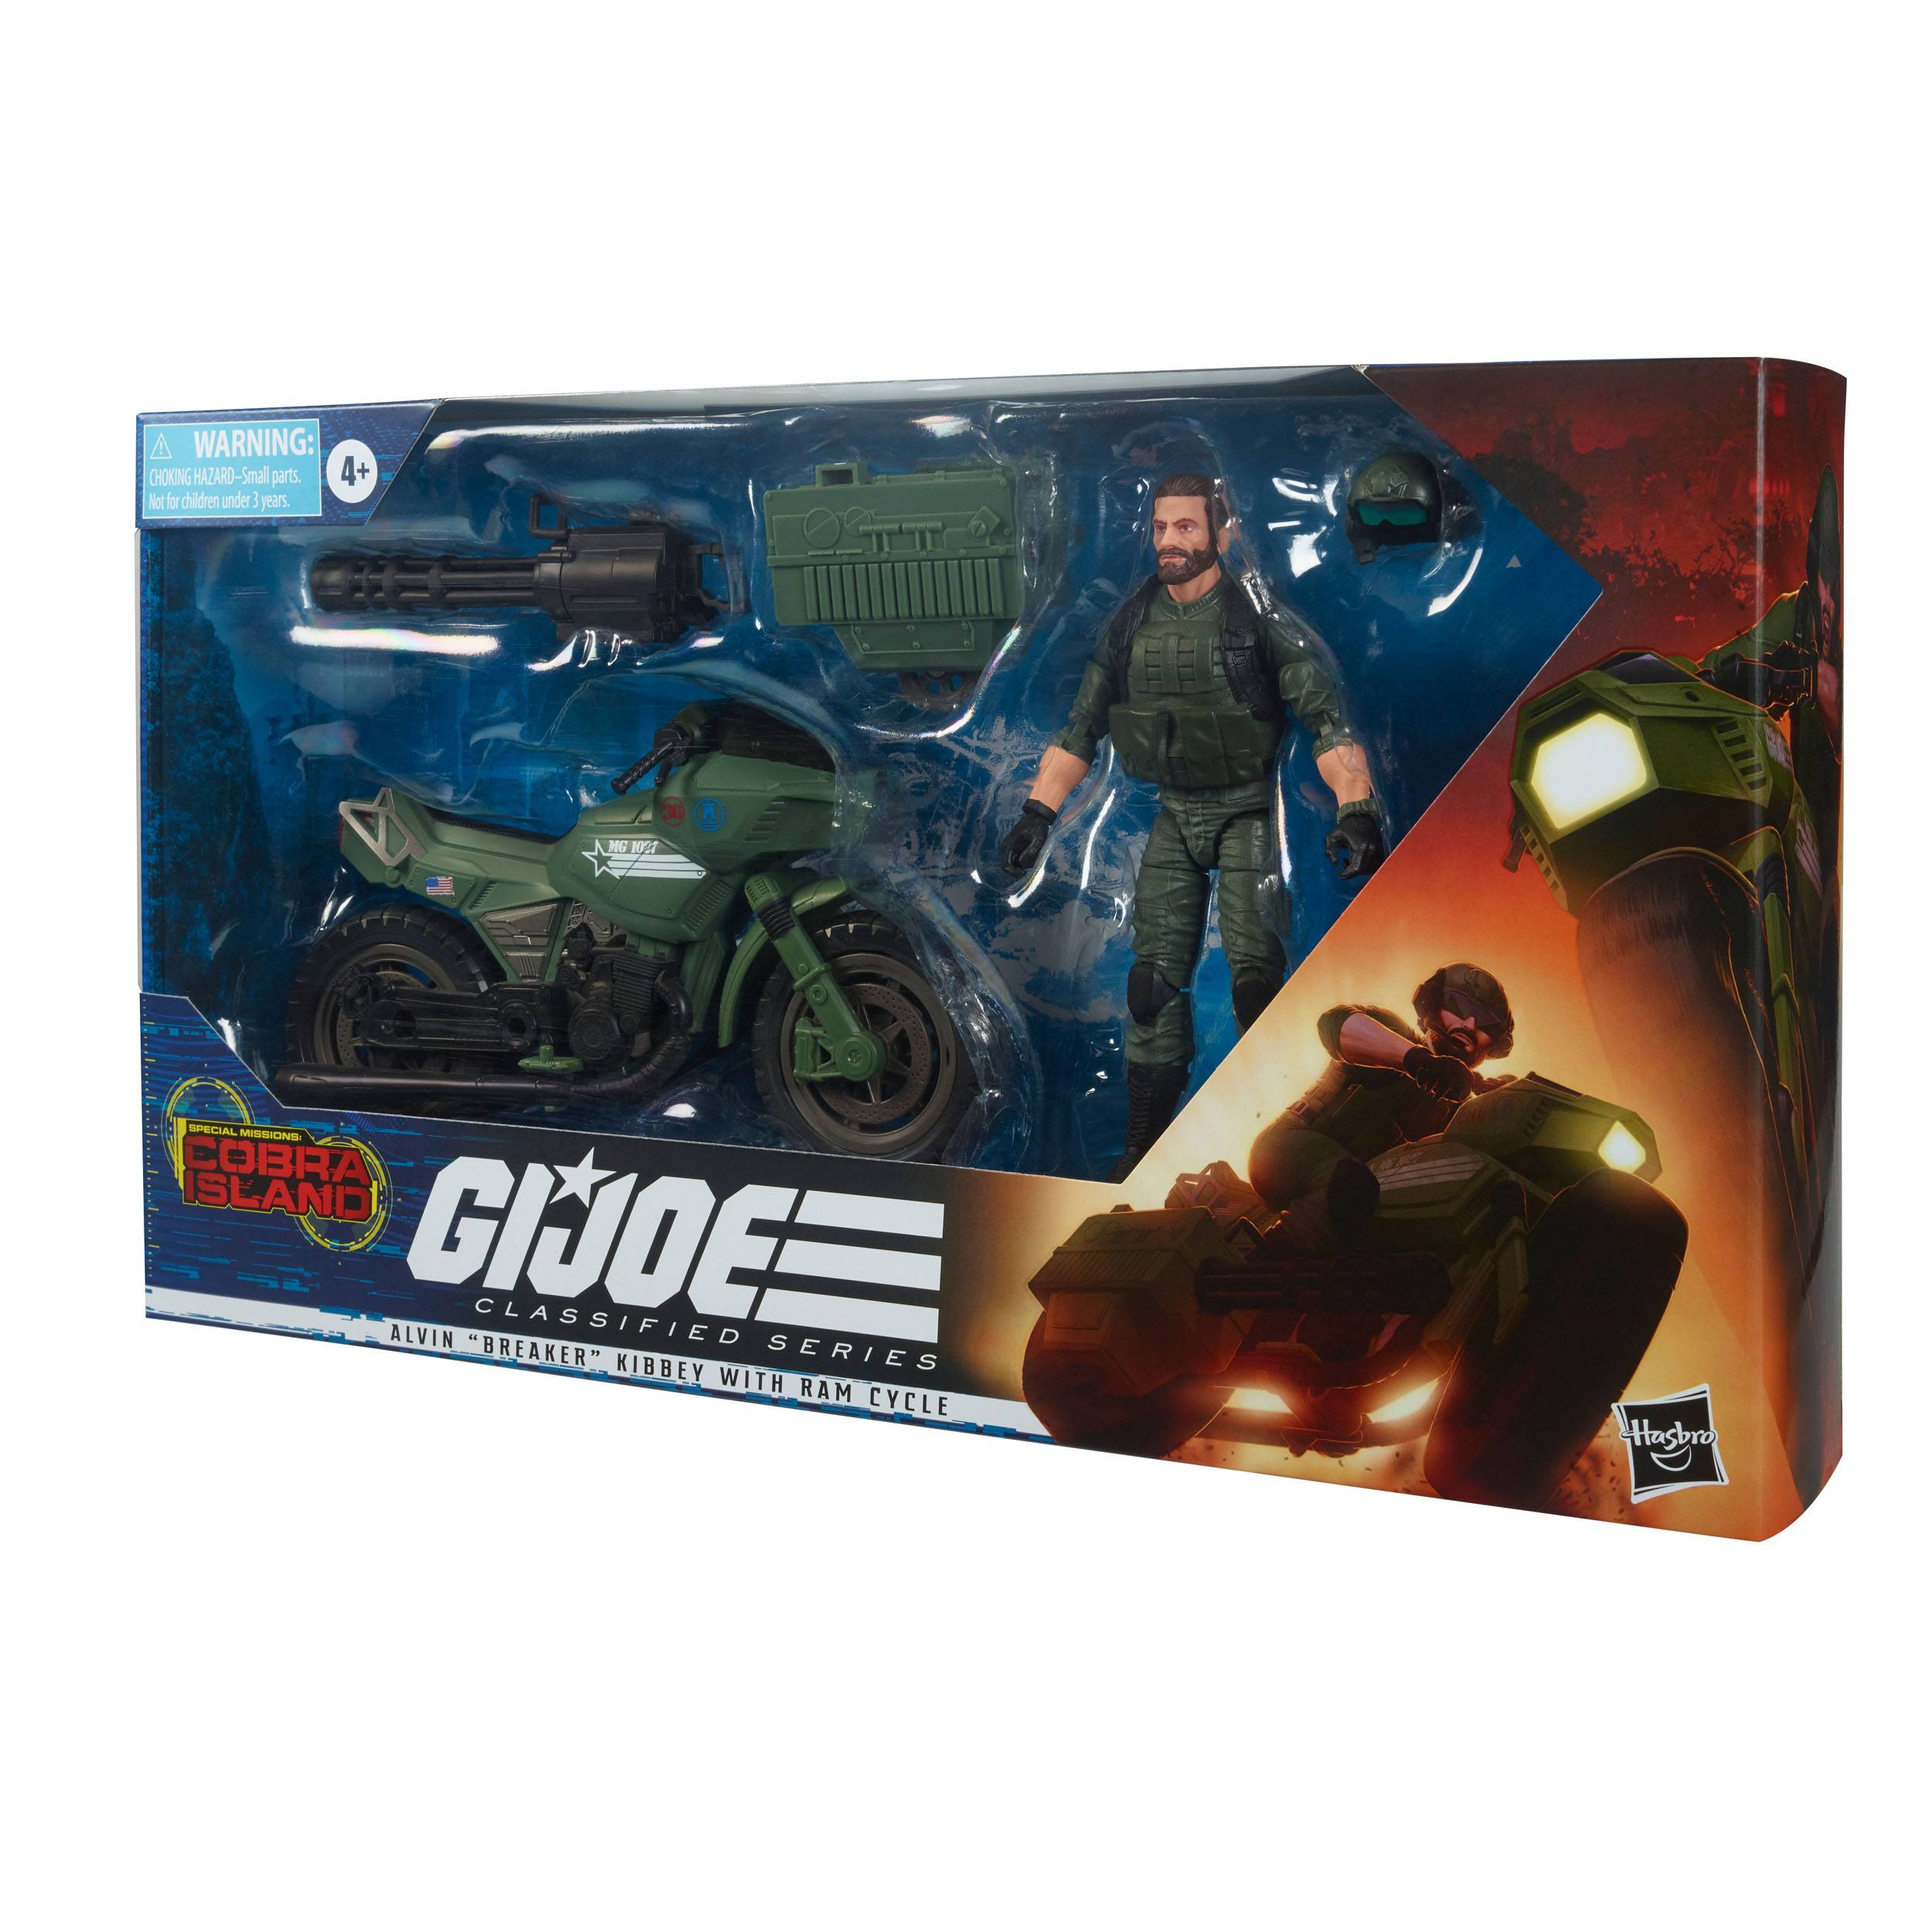 G.I. Joe Classified Series Cobra Island Actionfigur 2021 Alvin Breaker Kibbey with Ram Cycle 15 cm F07625L00 5010993836475